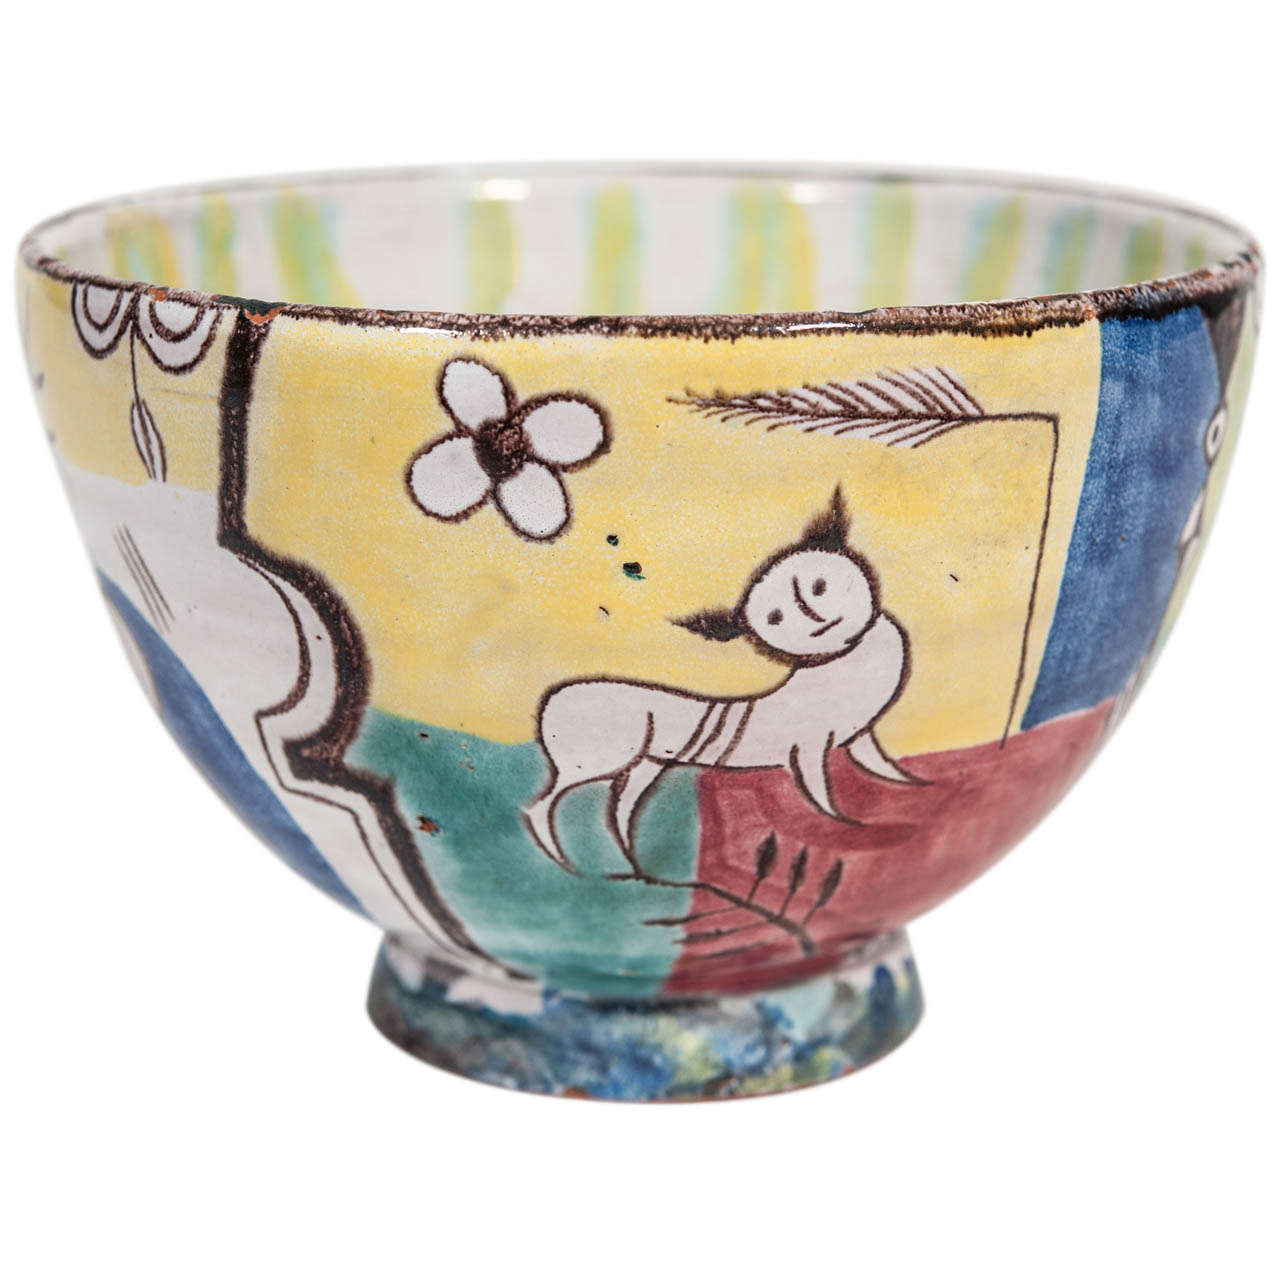 Wiener Werkstatte ceramic Bowl For Sale